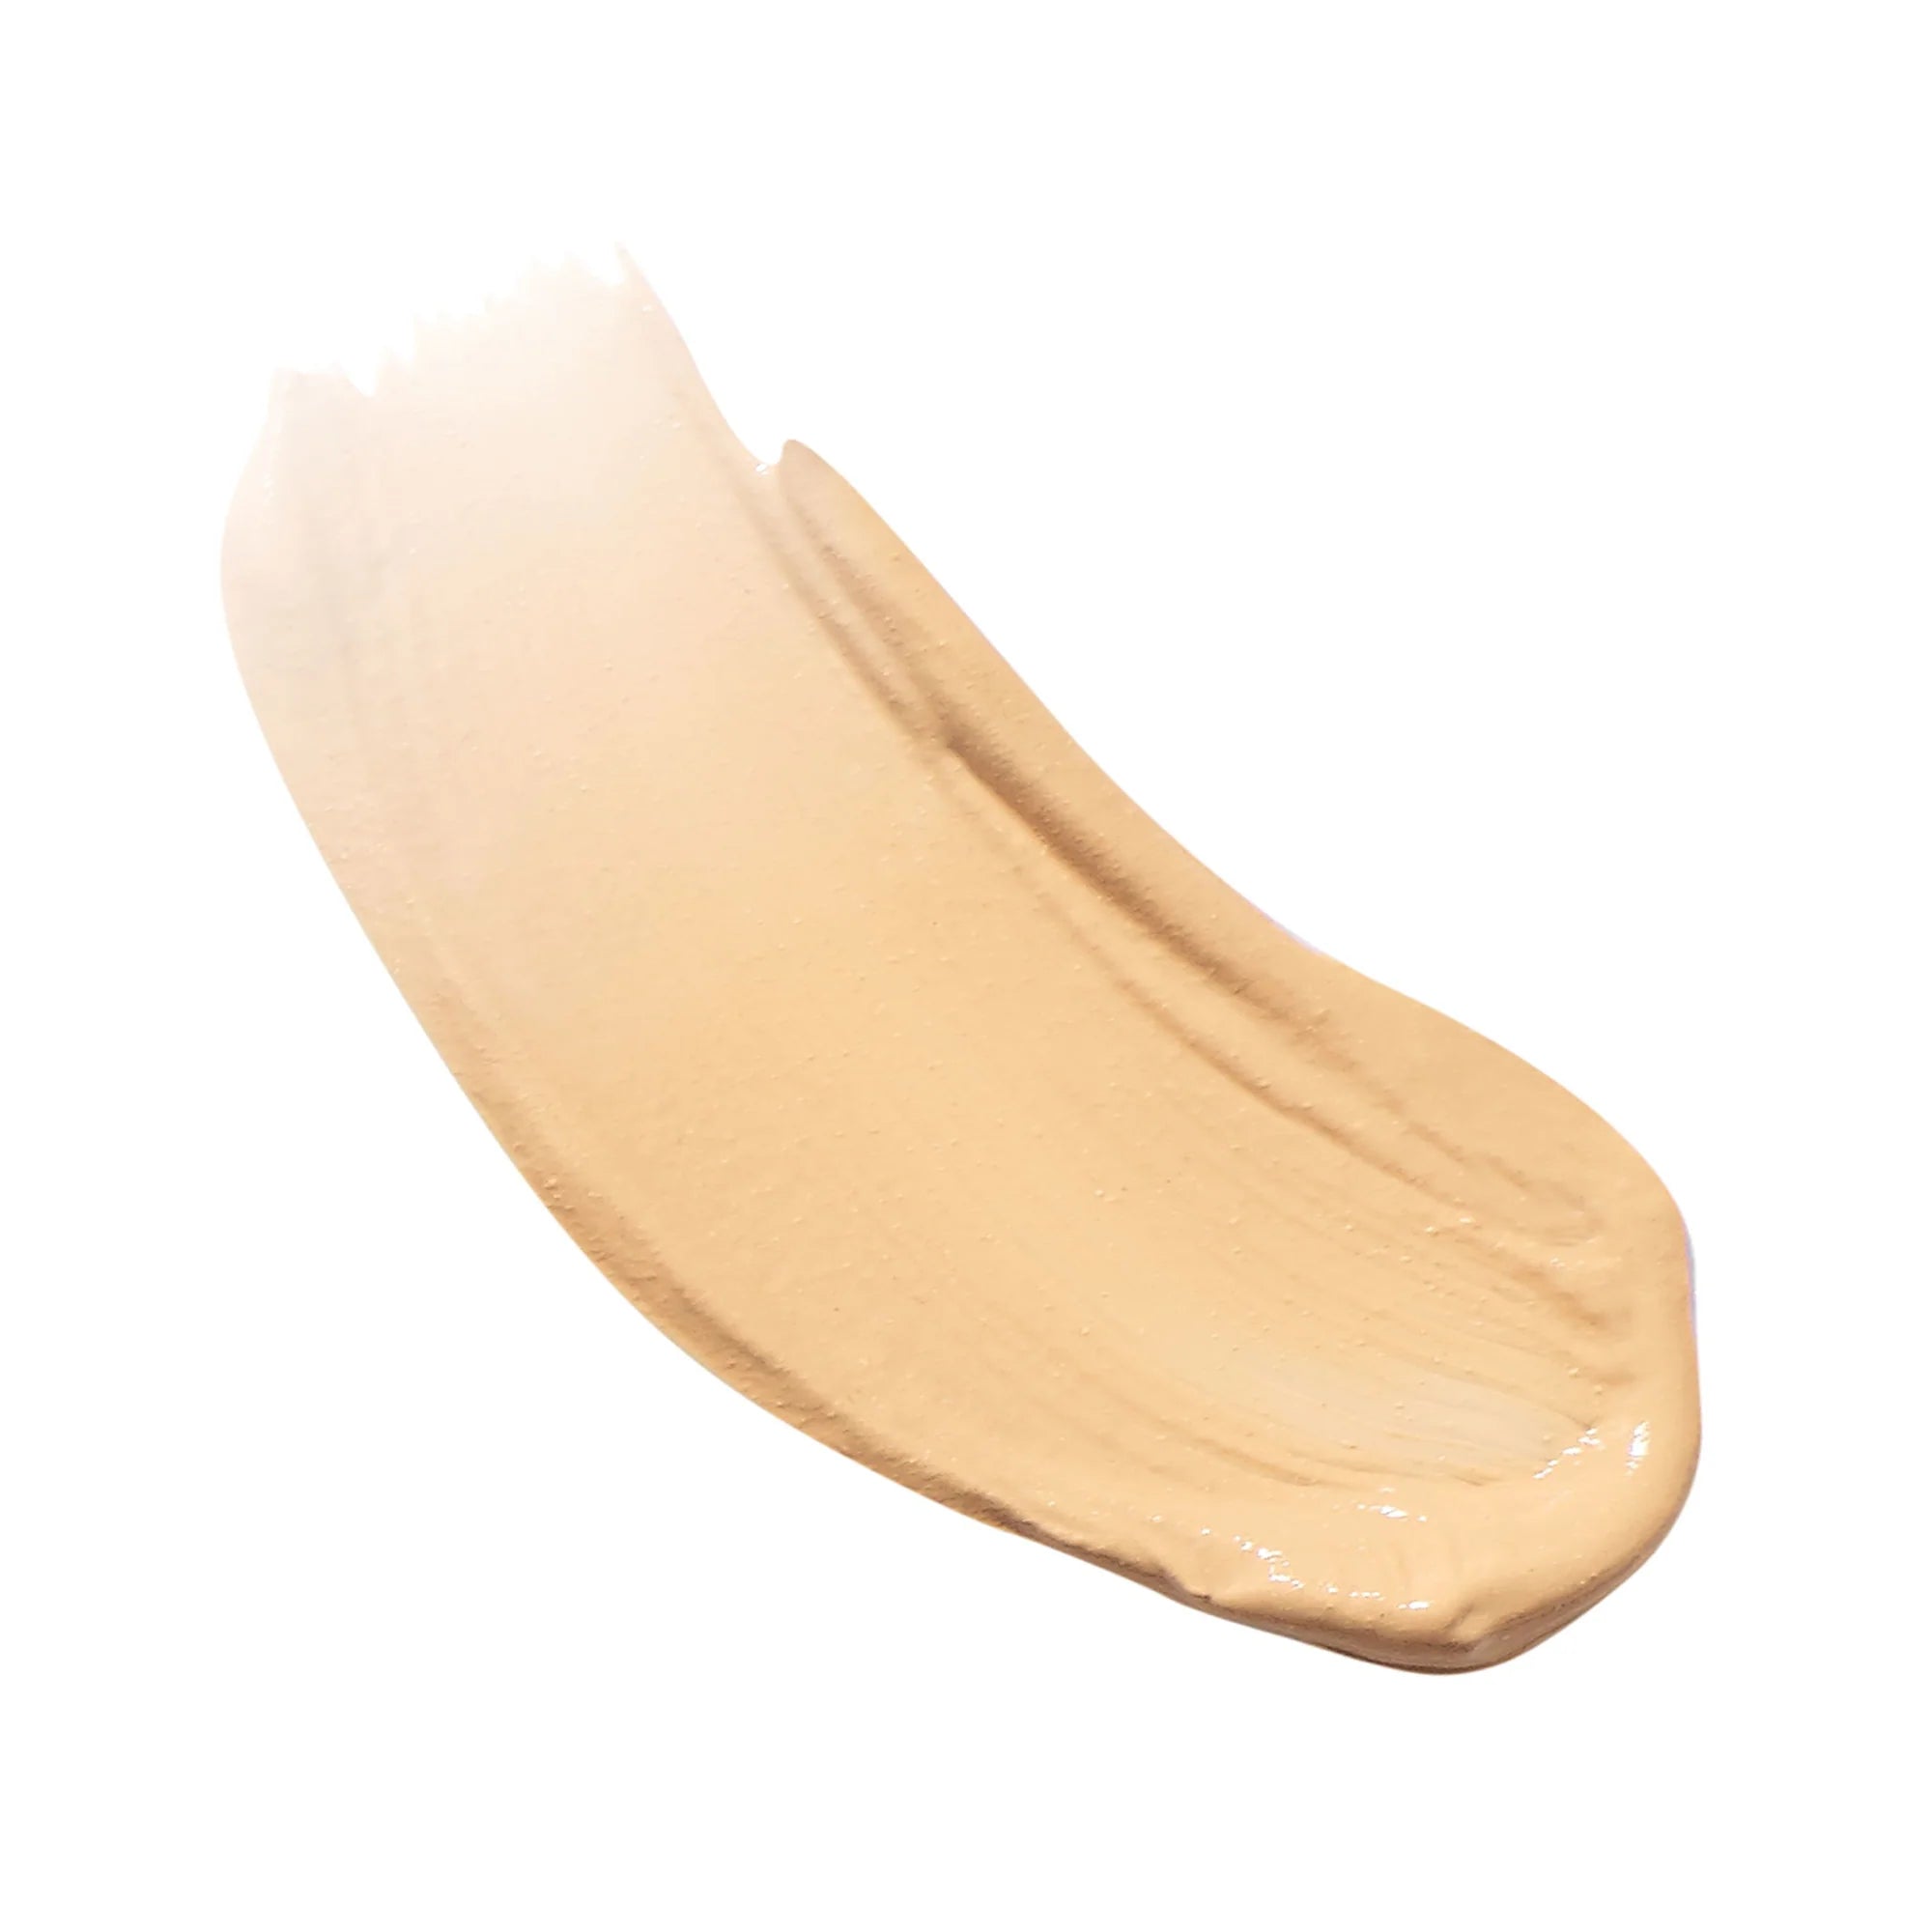 Jane Iredale's Active Light® Under-eye Concealer - shade No. 5 - medium yellow gold